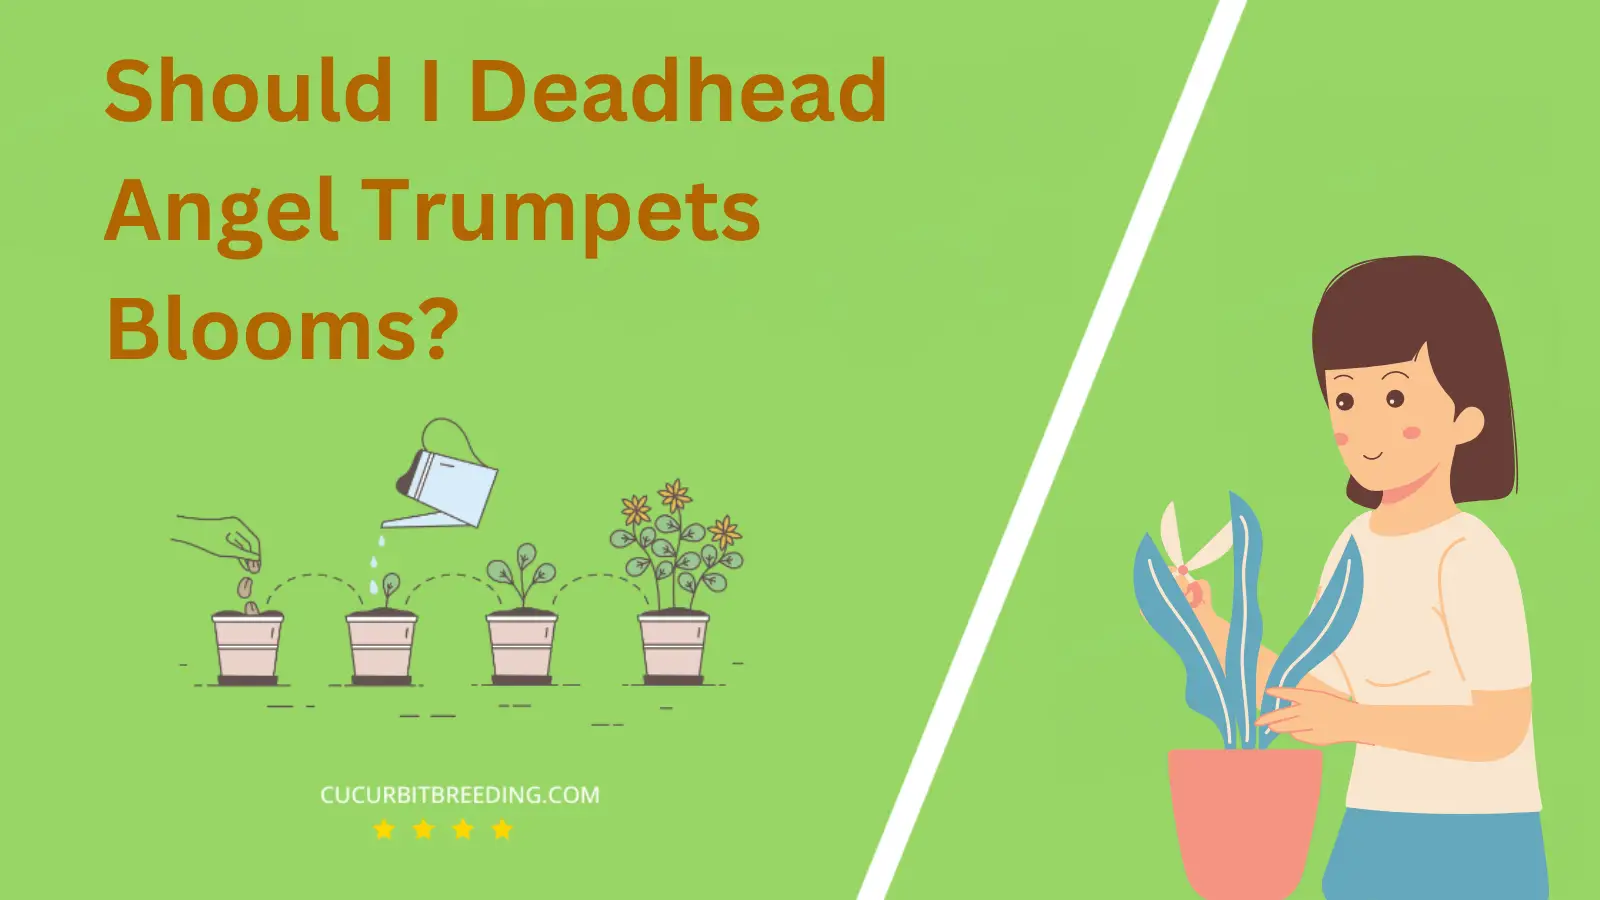 Should I Deadhead Angel Trumpets Blooms?